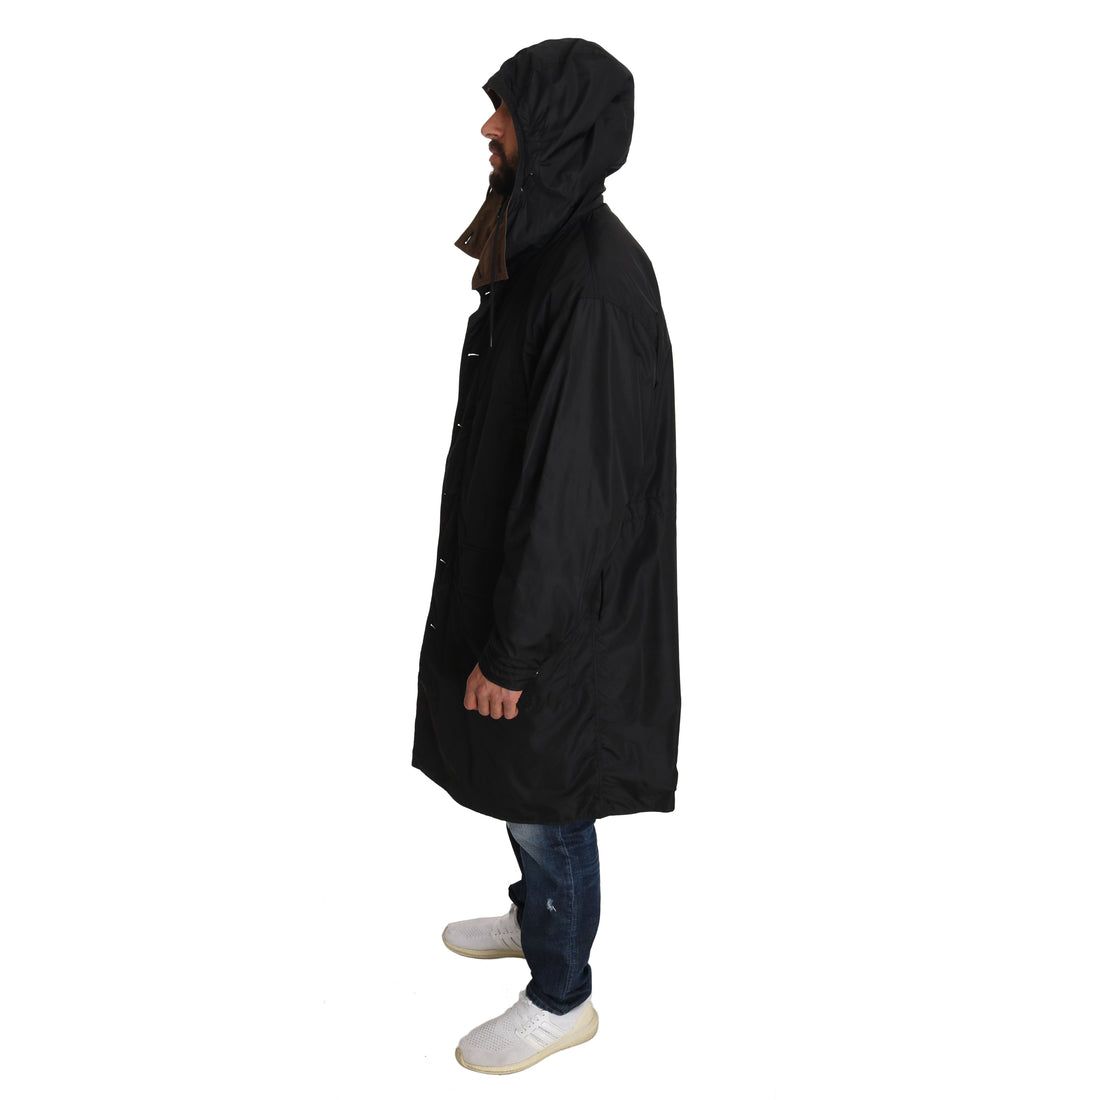 Dolce & Gabbana Black Brown Hooded Reversible Raincoat - Paris Deluxe